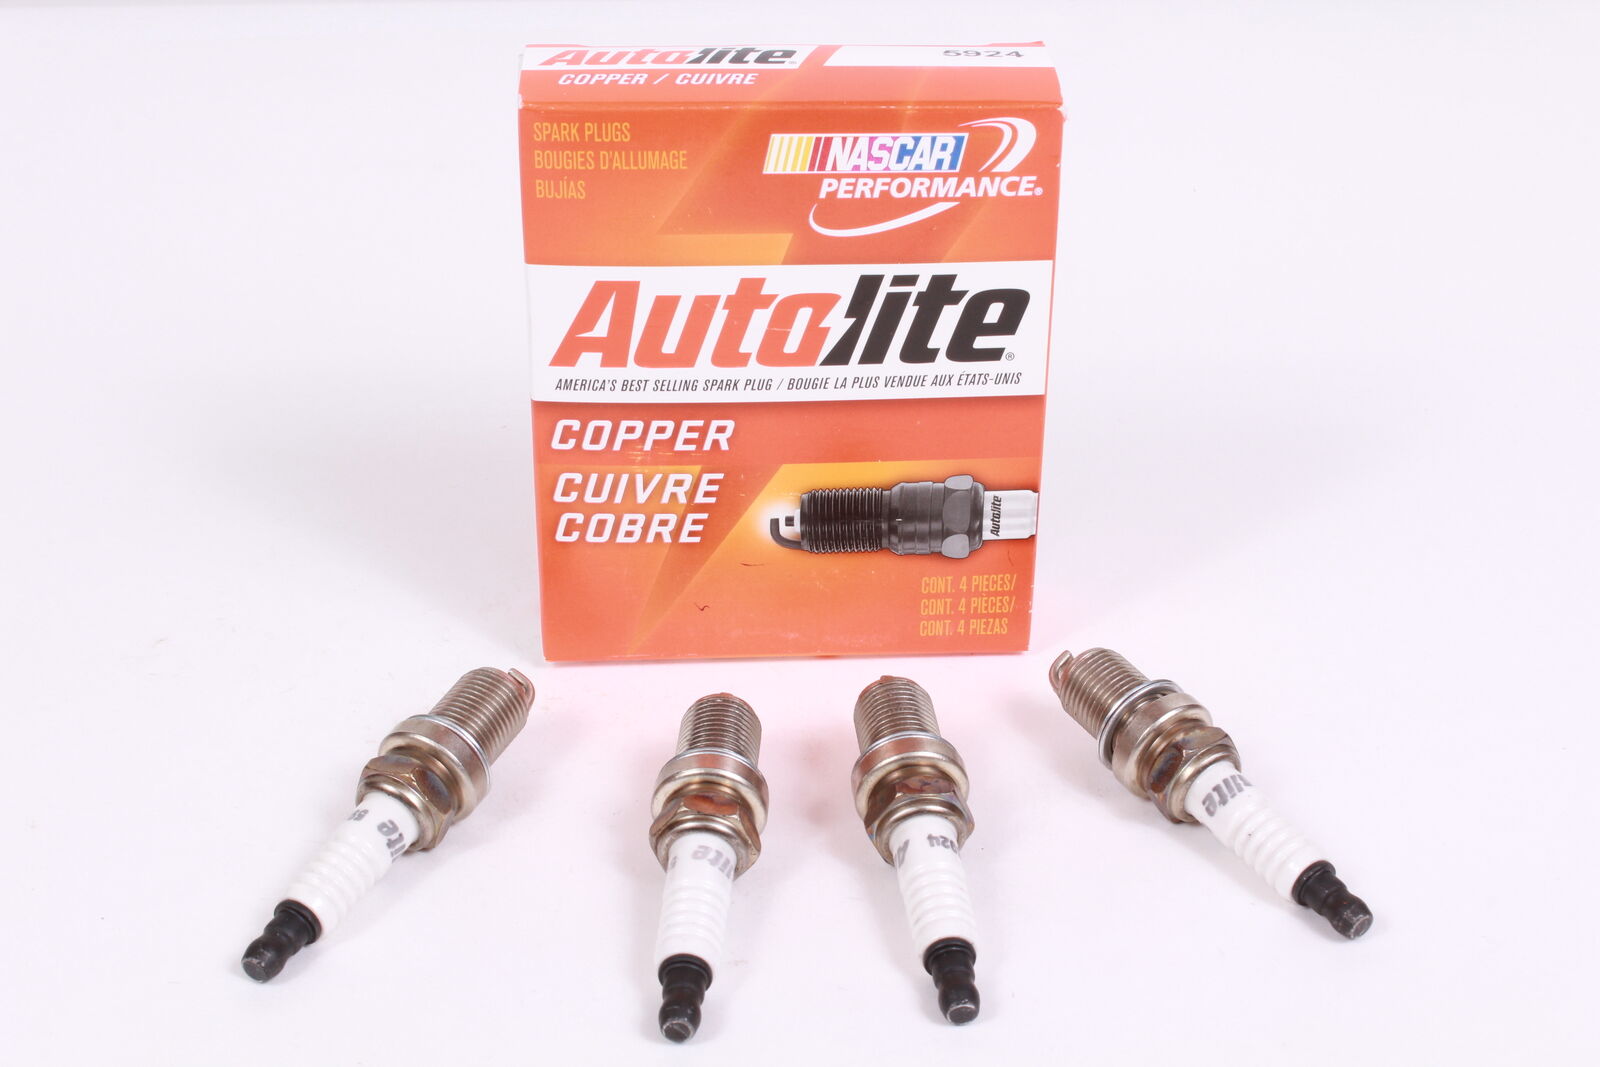 Box of 4 Genuine Autolite 5924 Copper Resistor Spark Plugs